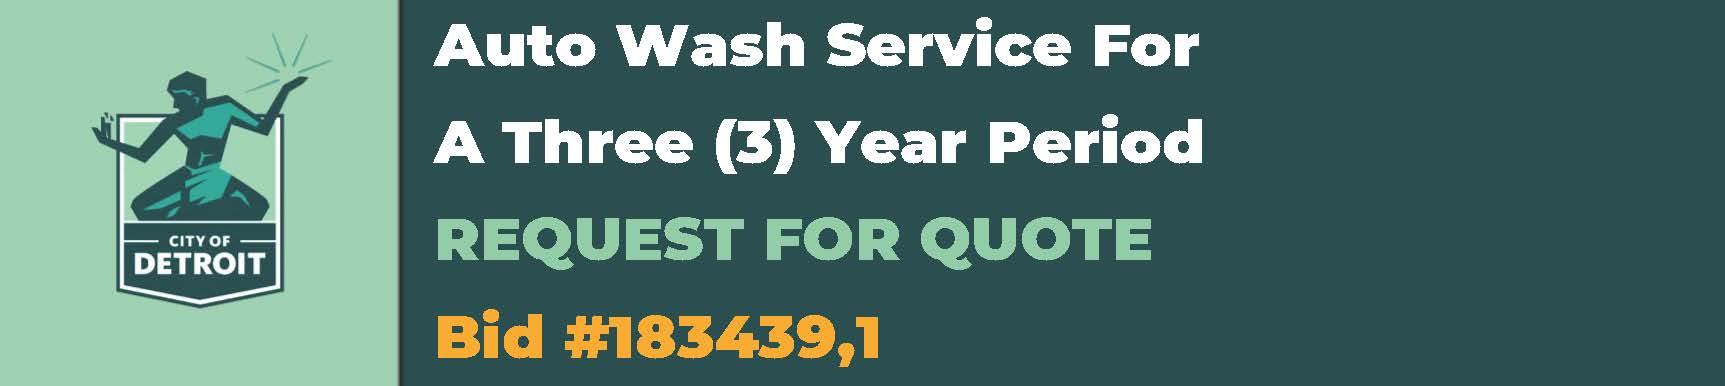 Auto Wash Service For A Three (3) Year Period